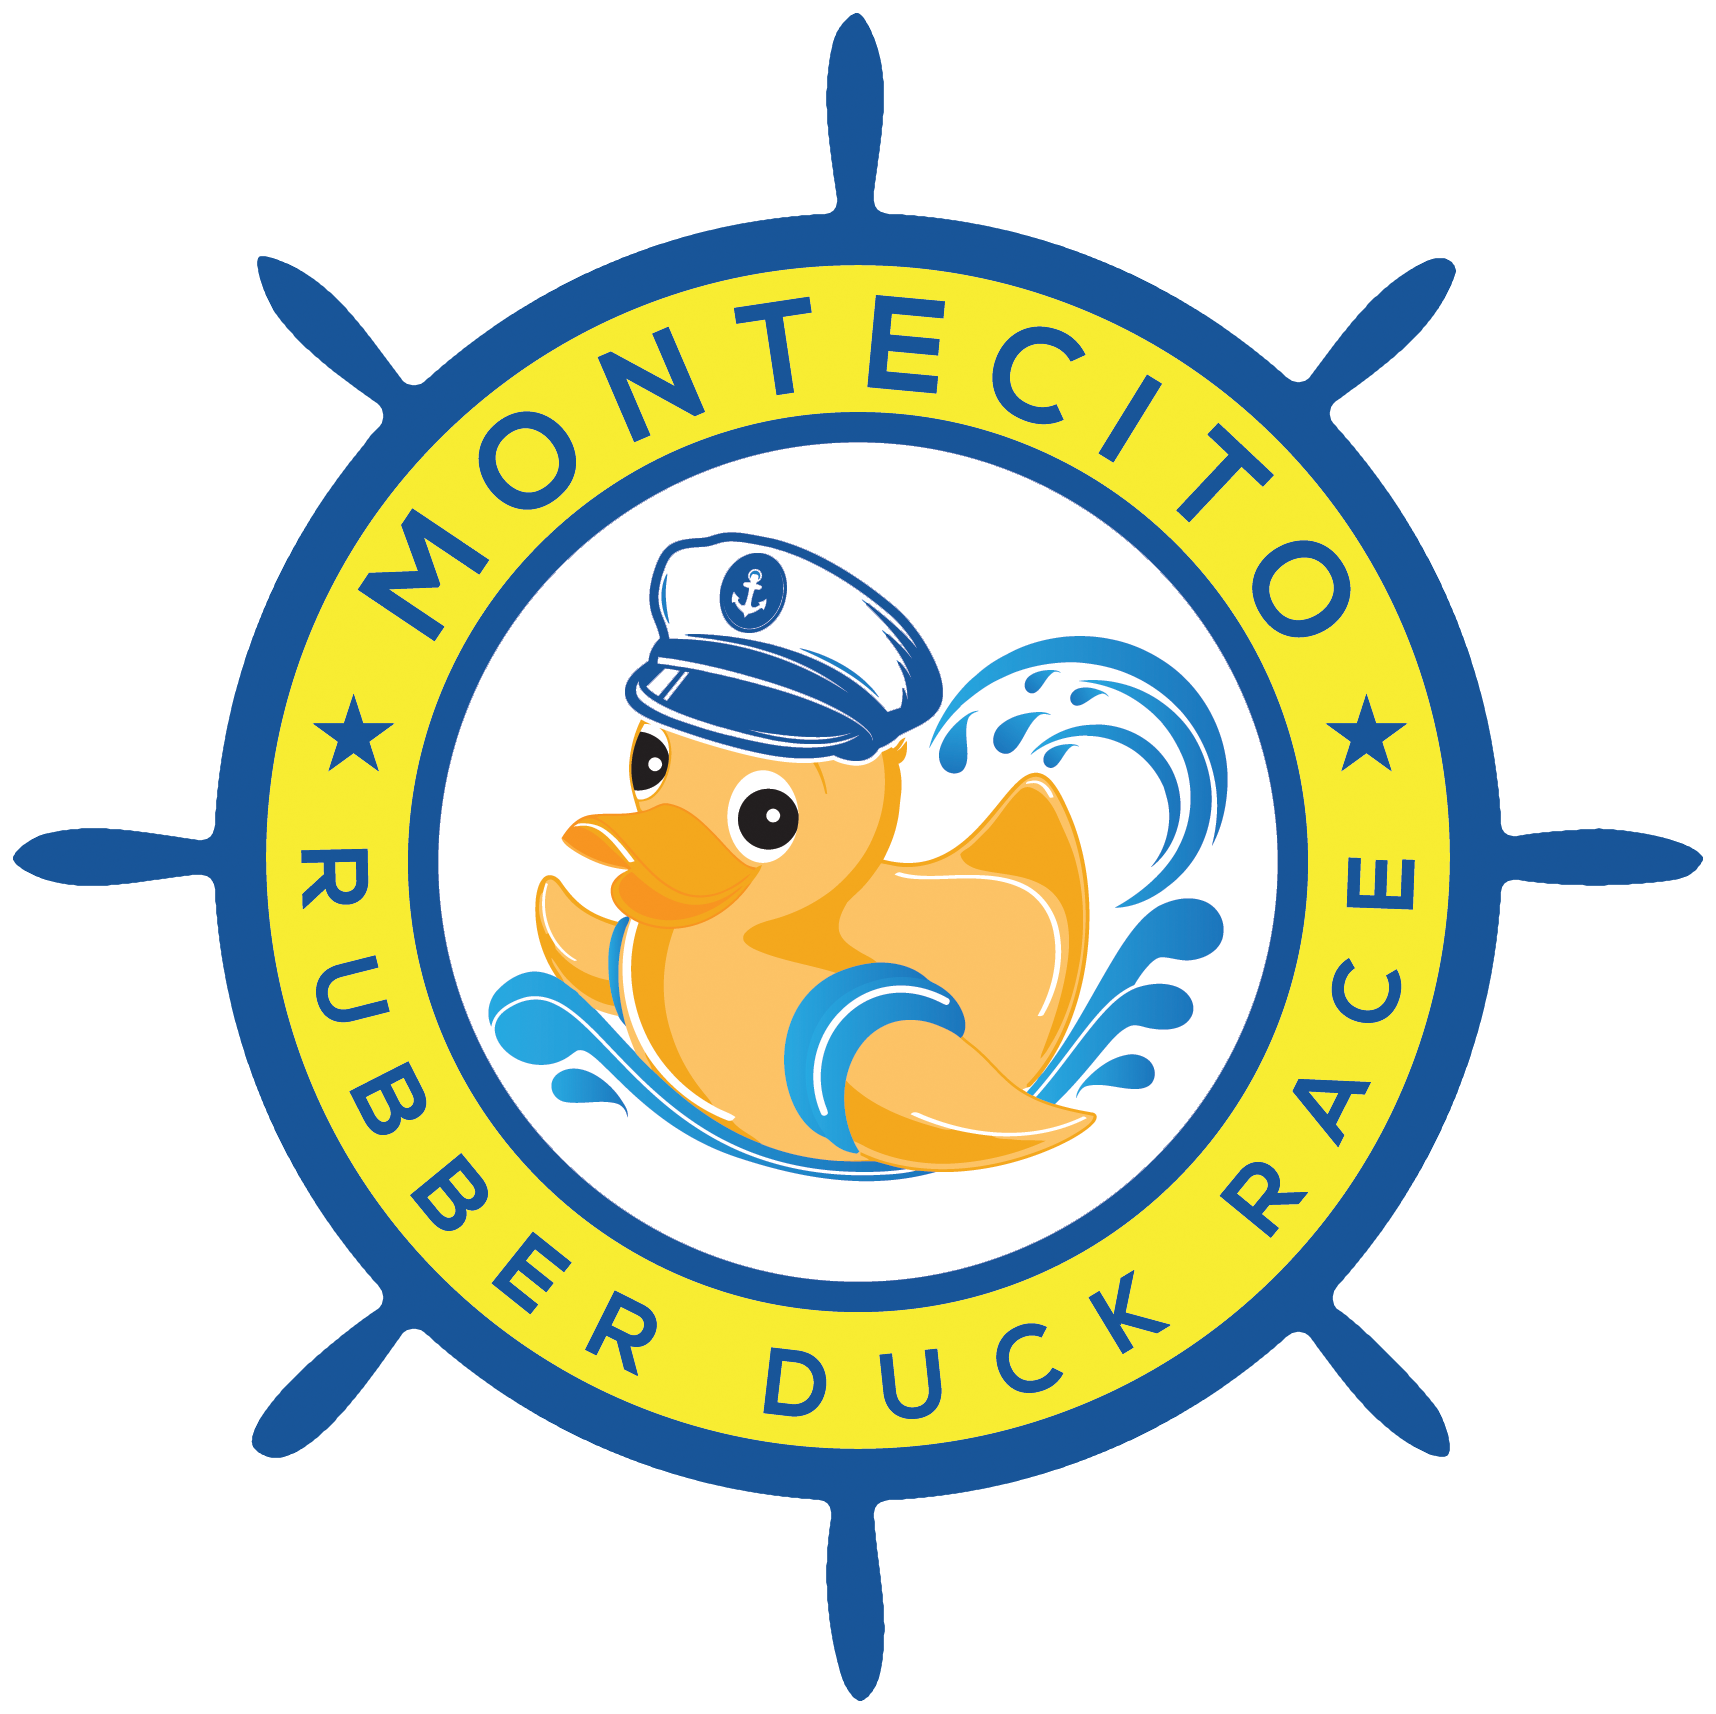 Montecito Rubber Duck Race - Montecito Rubber Duck Race (1716x1714)